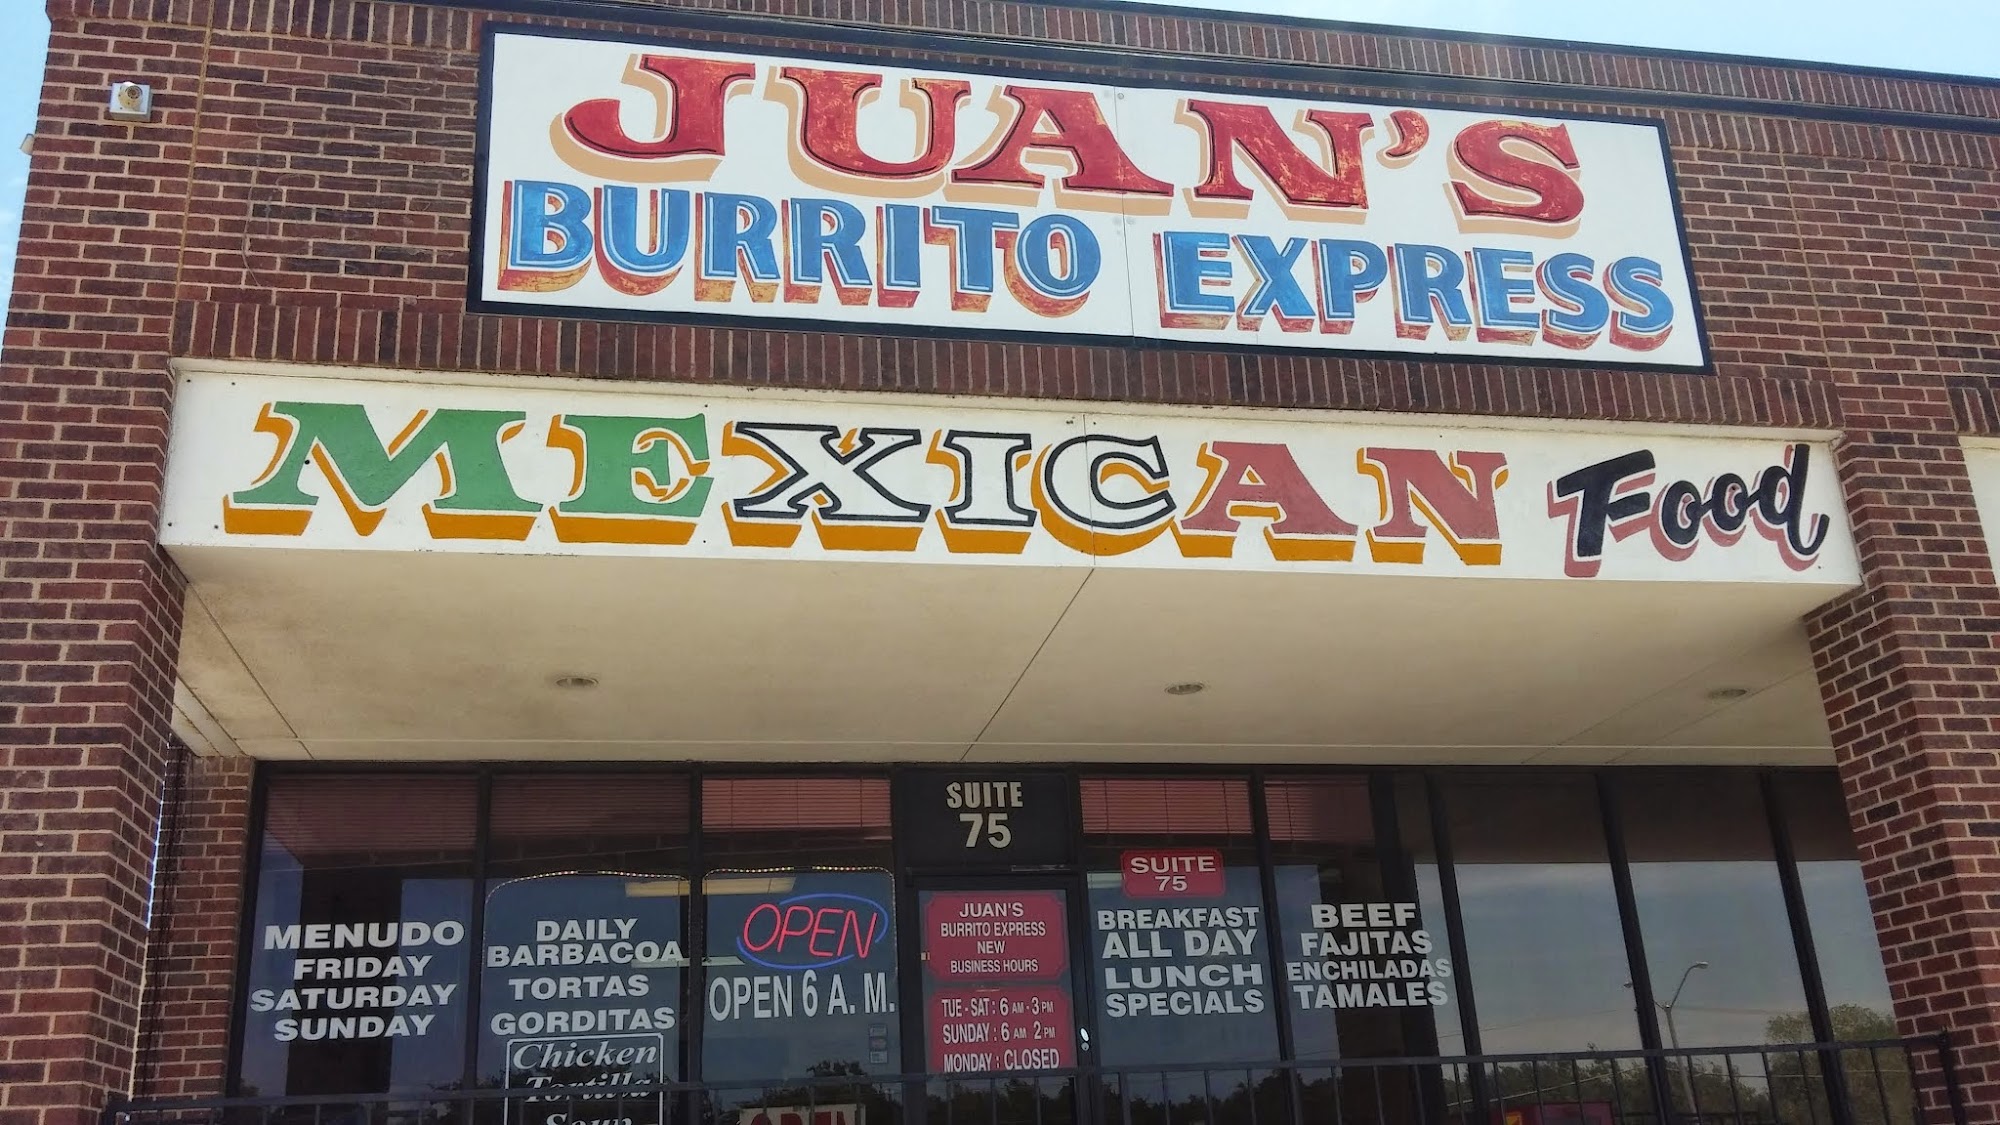 Juan's Burrito Express